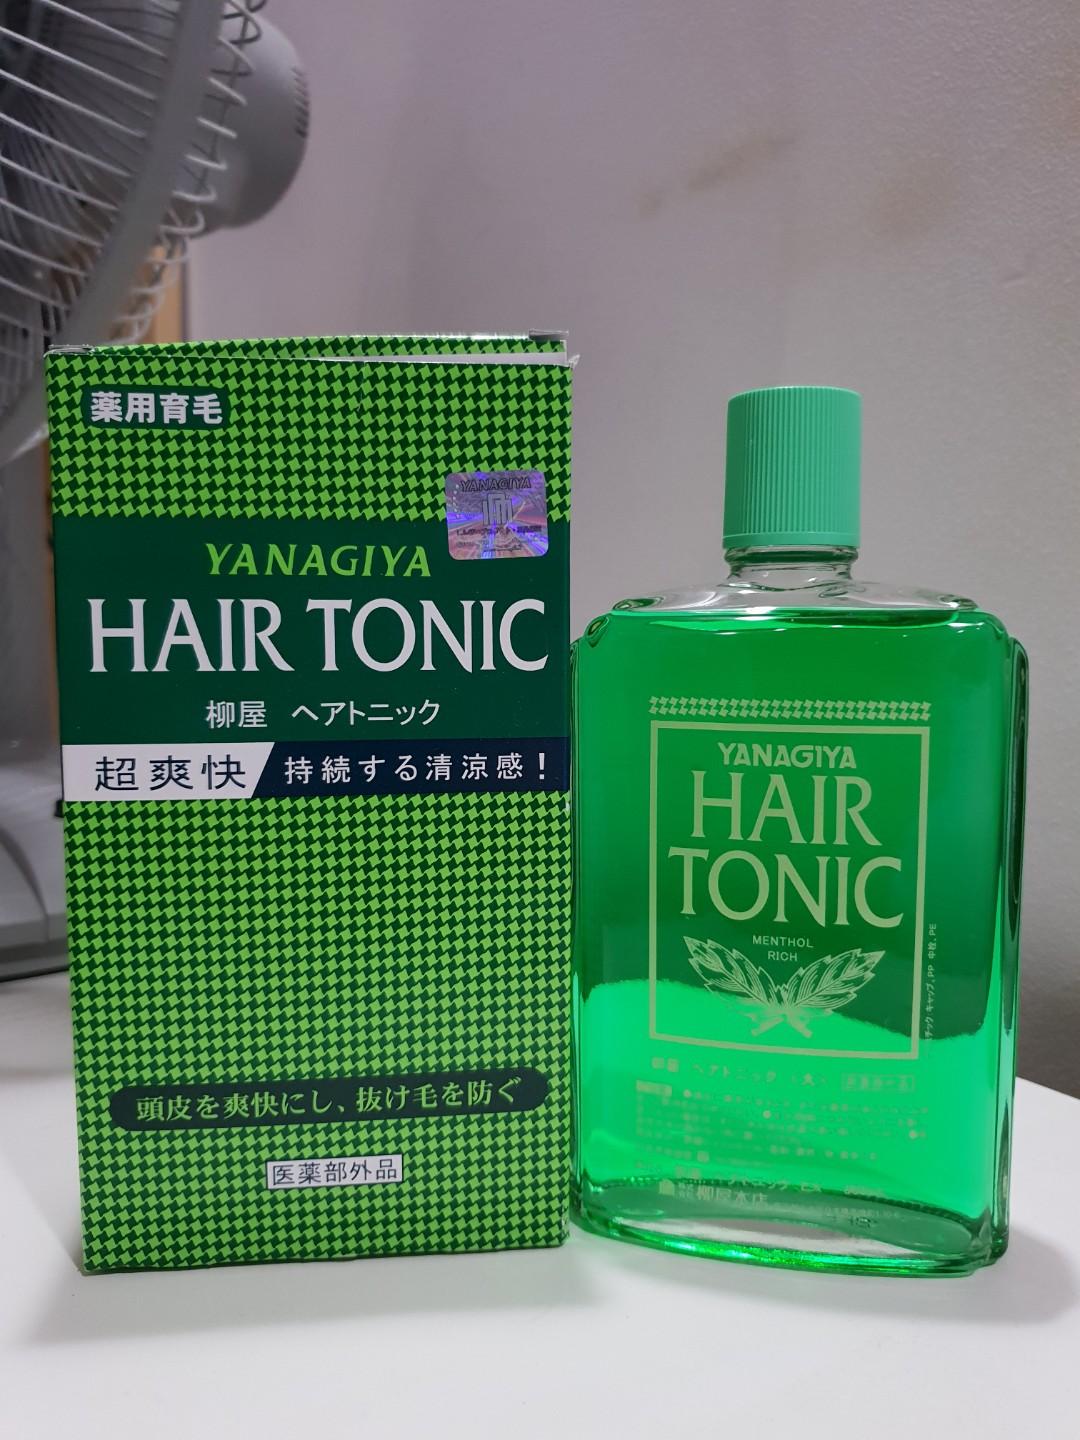 Authentic Yanagiya Hair Tonic 360ml 柳屋超爽快 Beauty Personal Care Hair On Carousell